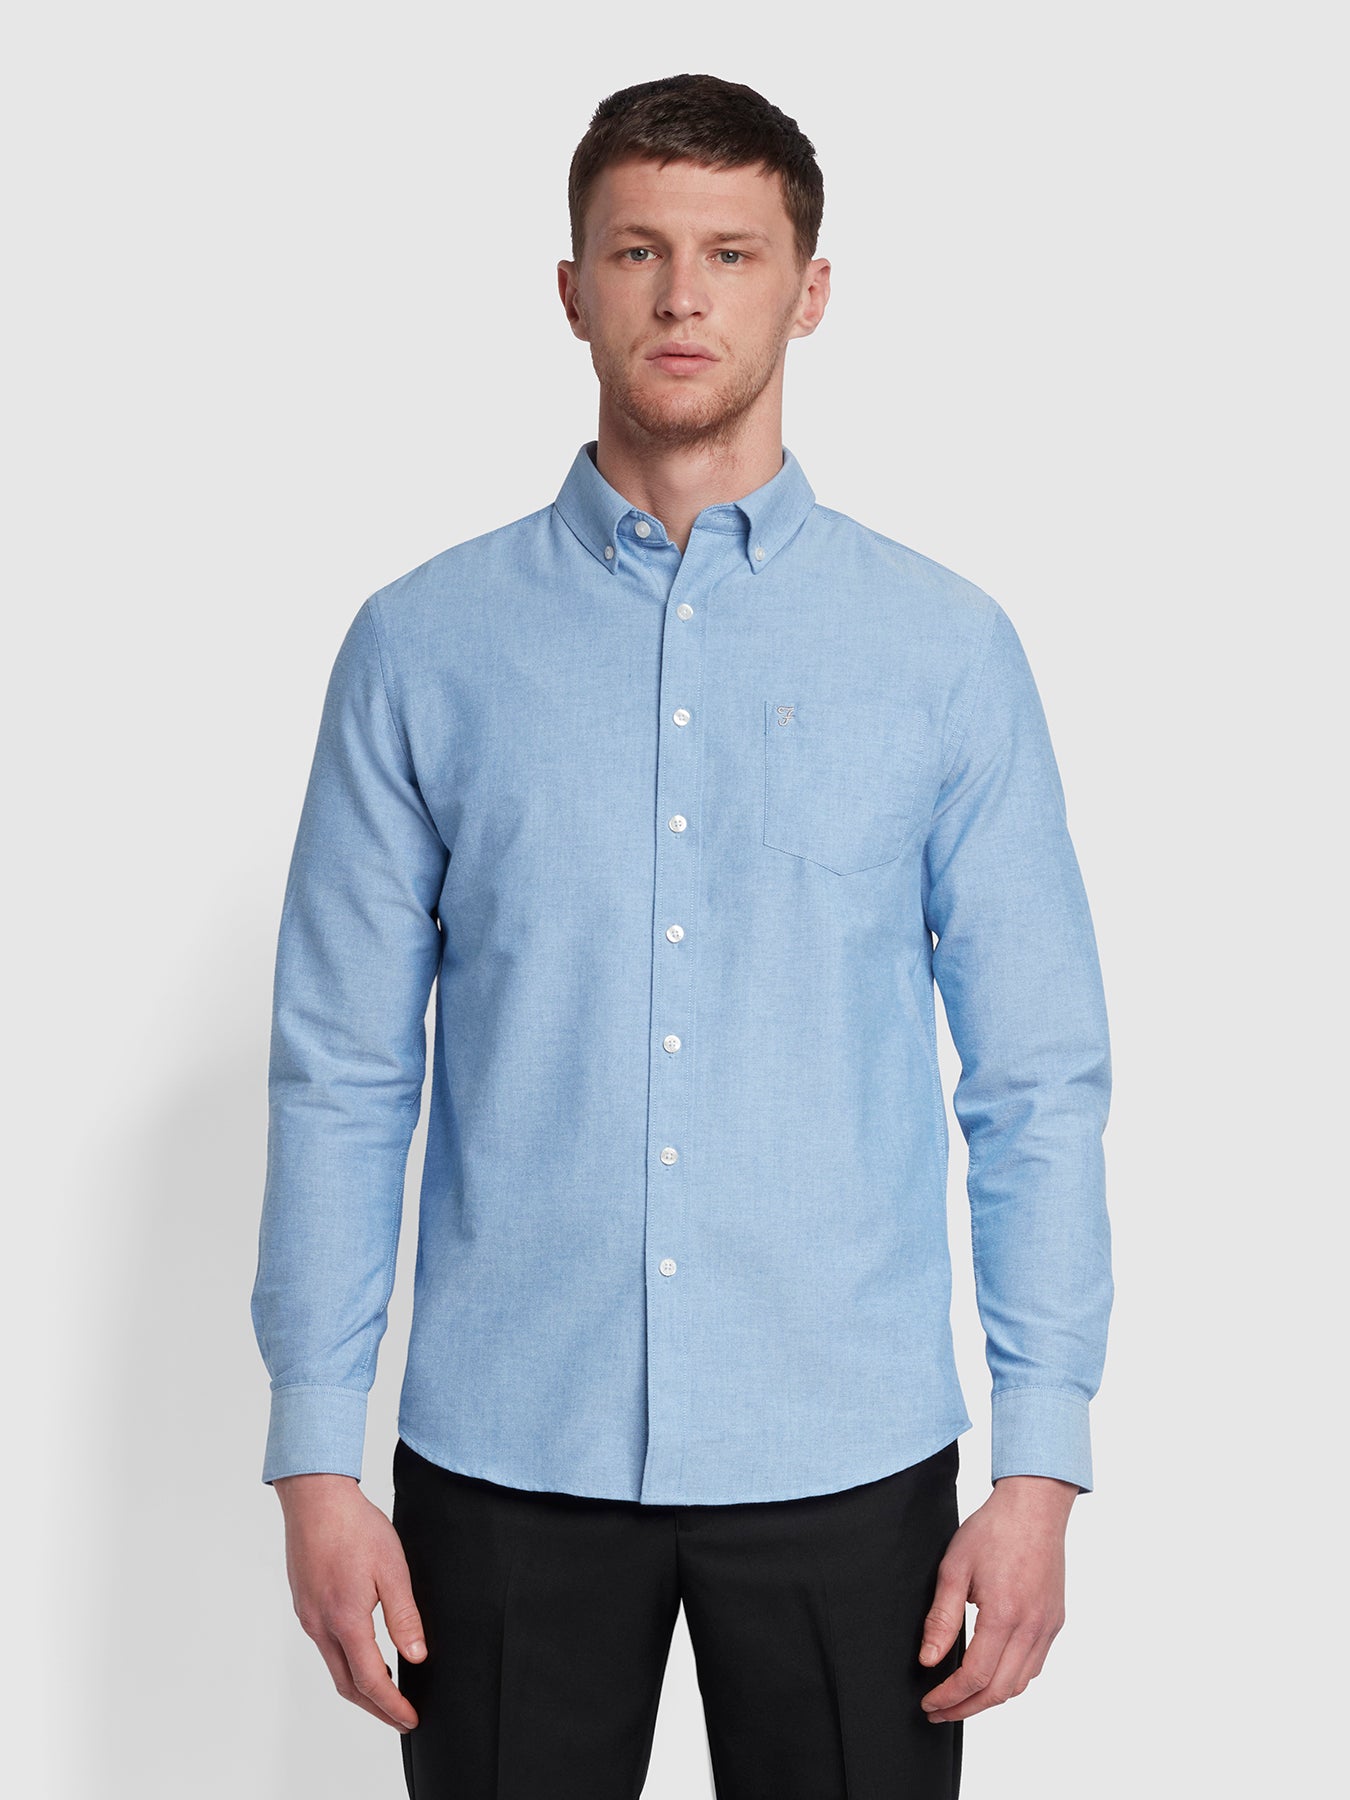 View Drayton Modern Fit Oxford Shirt In Regatta Blue information